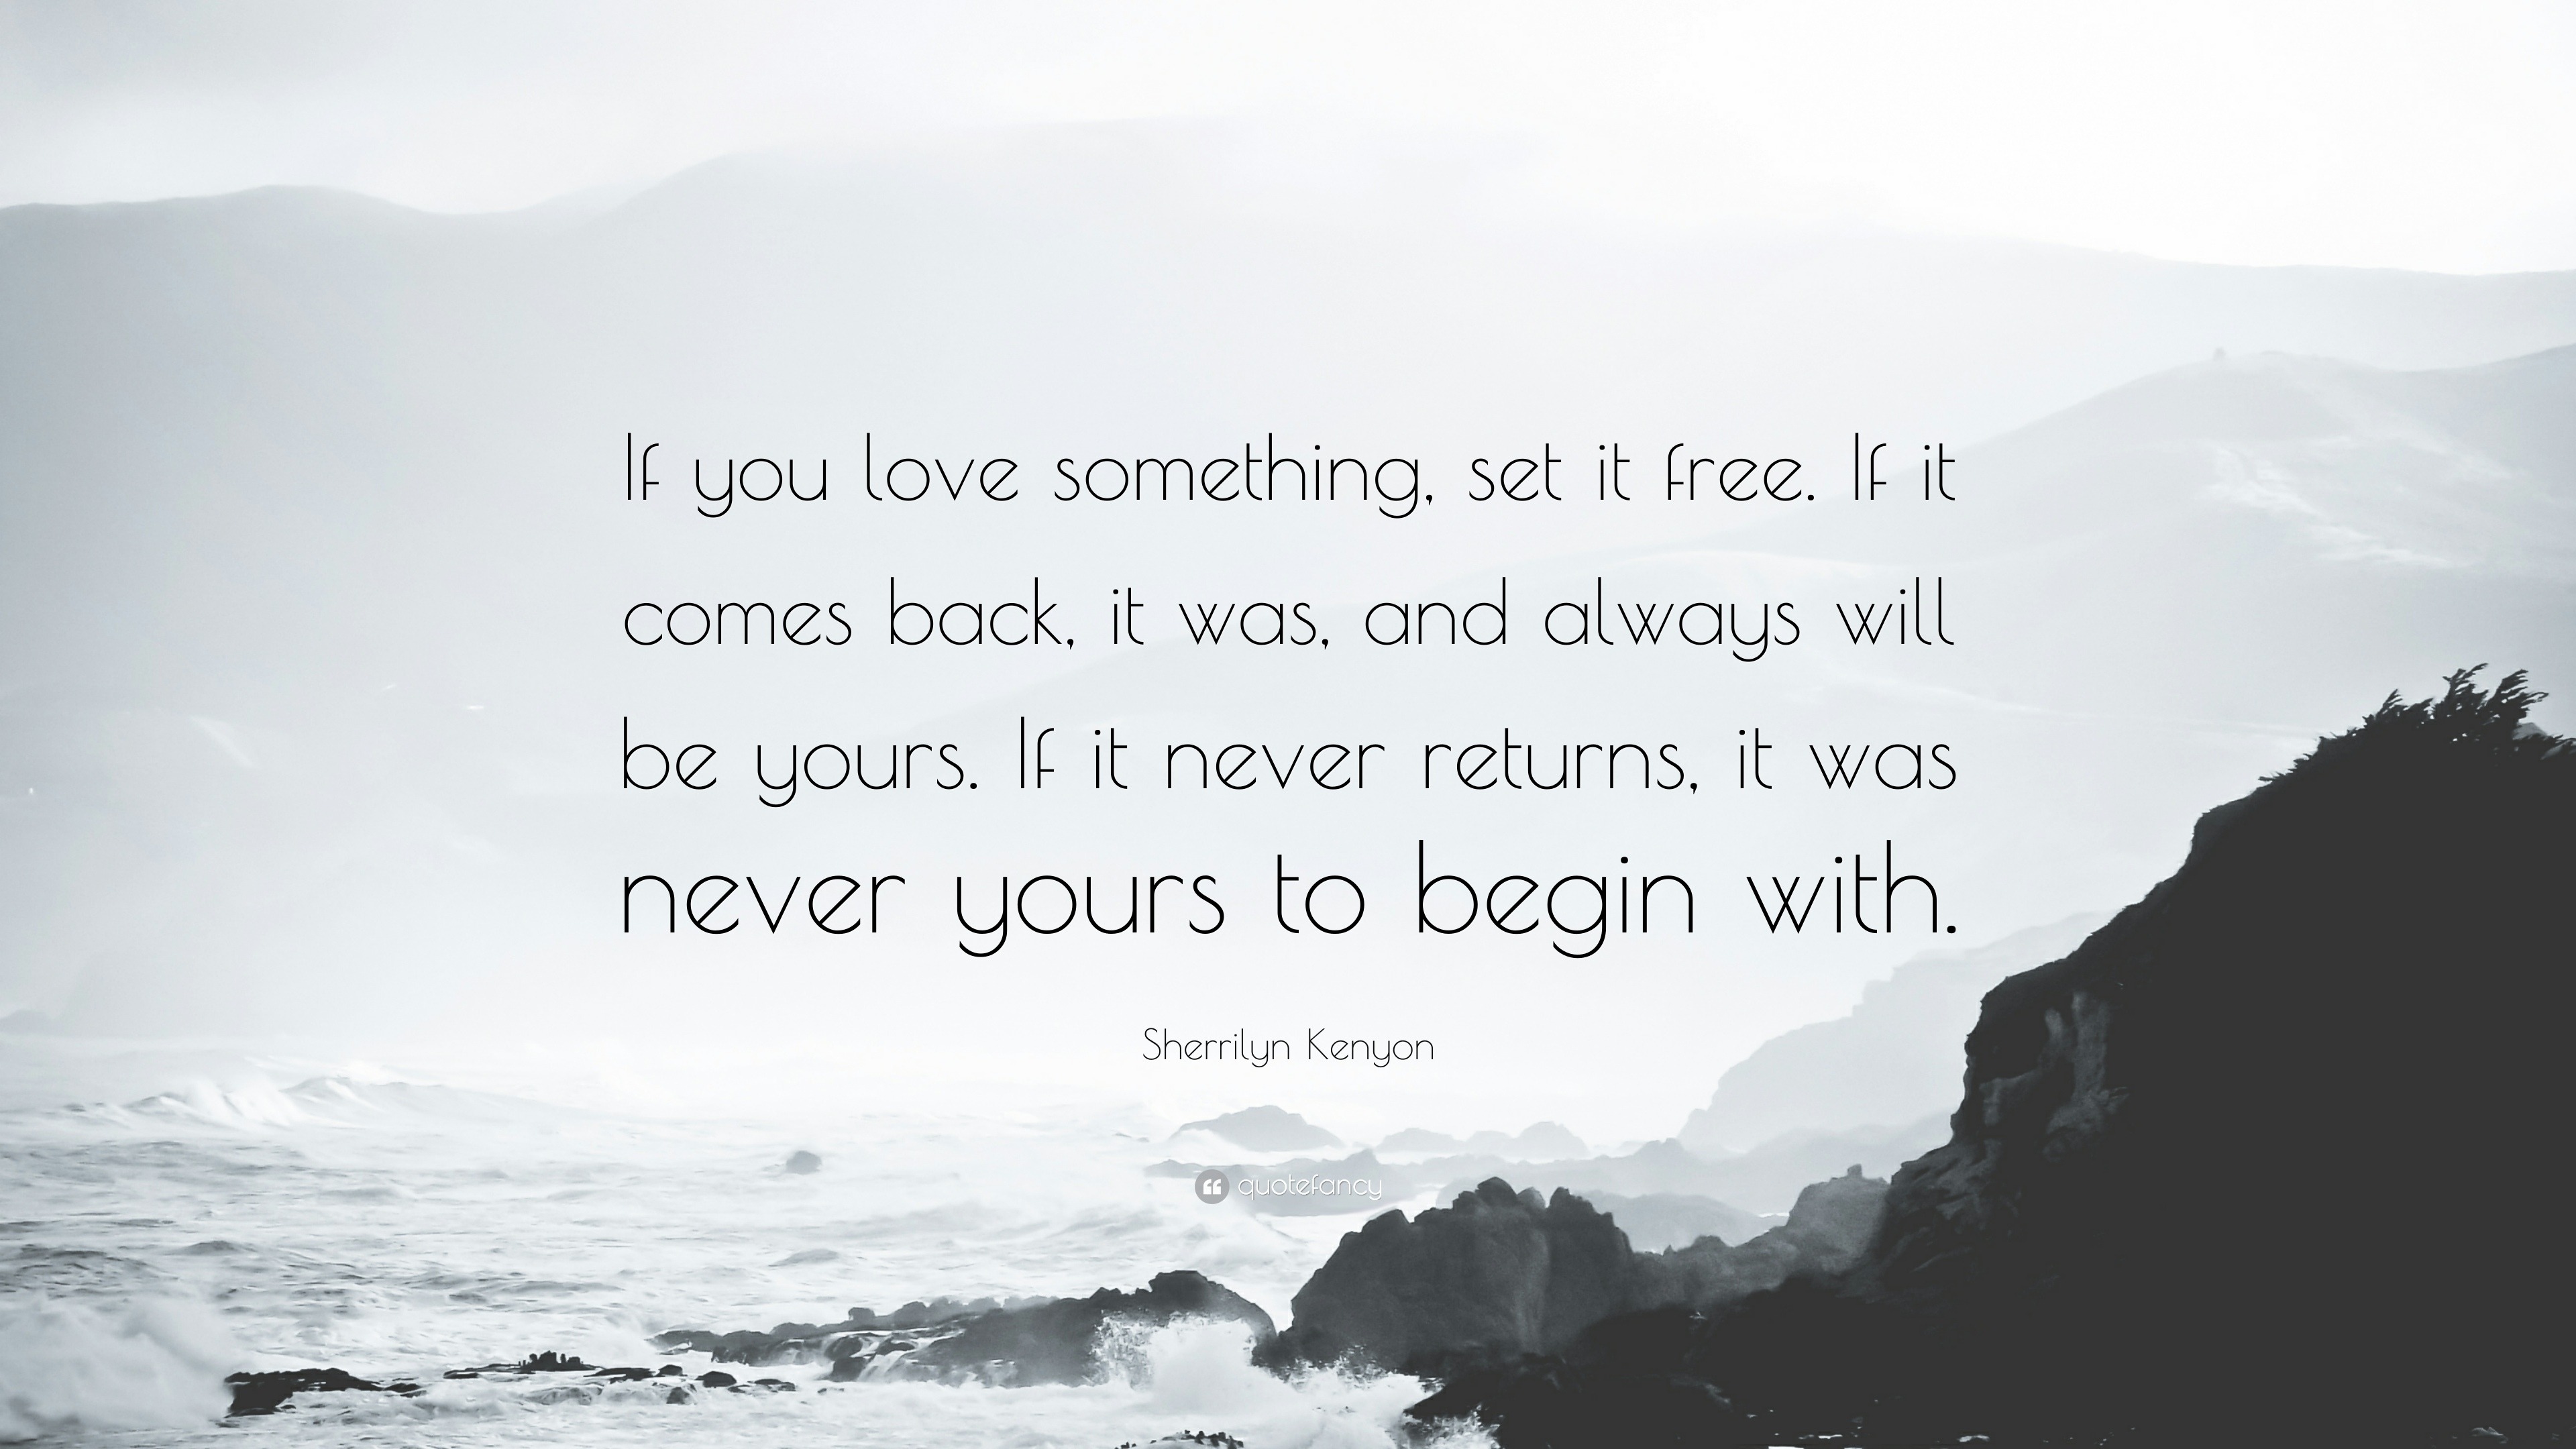 Sherrilyn Kenyon Quote “If you love something set it free If it